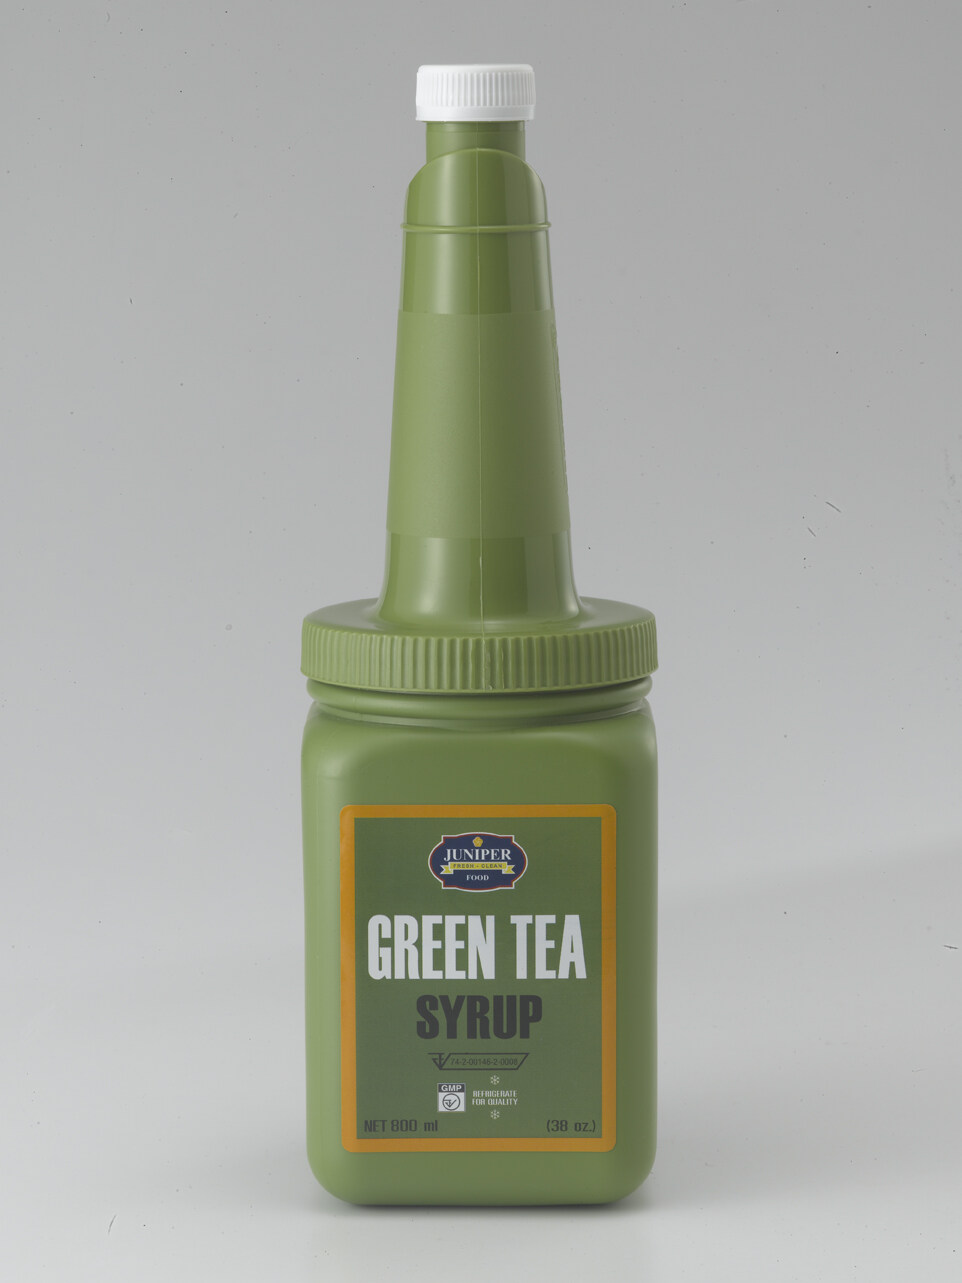 Juniper Green Tea Syrup 800 ml. (จูนิเปอร์ ชาเขียว ไซรัป 800 มิลลิลิตร)**จำกัดการซื้อ 8 กระปุก/ออร์เดอร์**